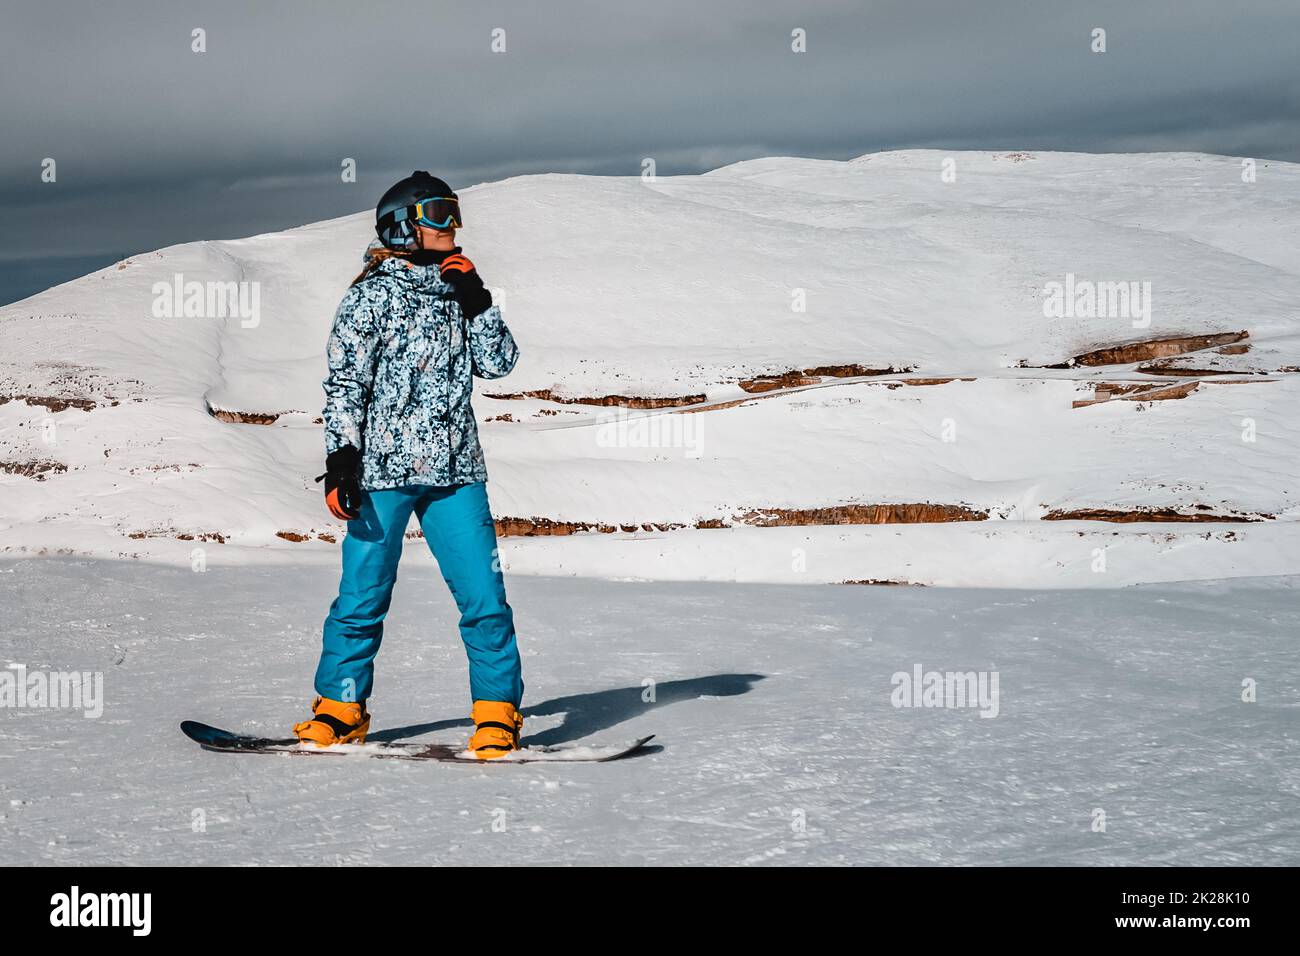 Winterurlaub im Skigebiet Stockfoto